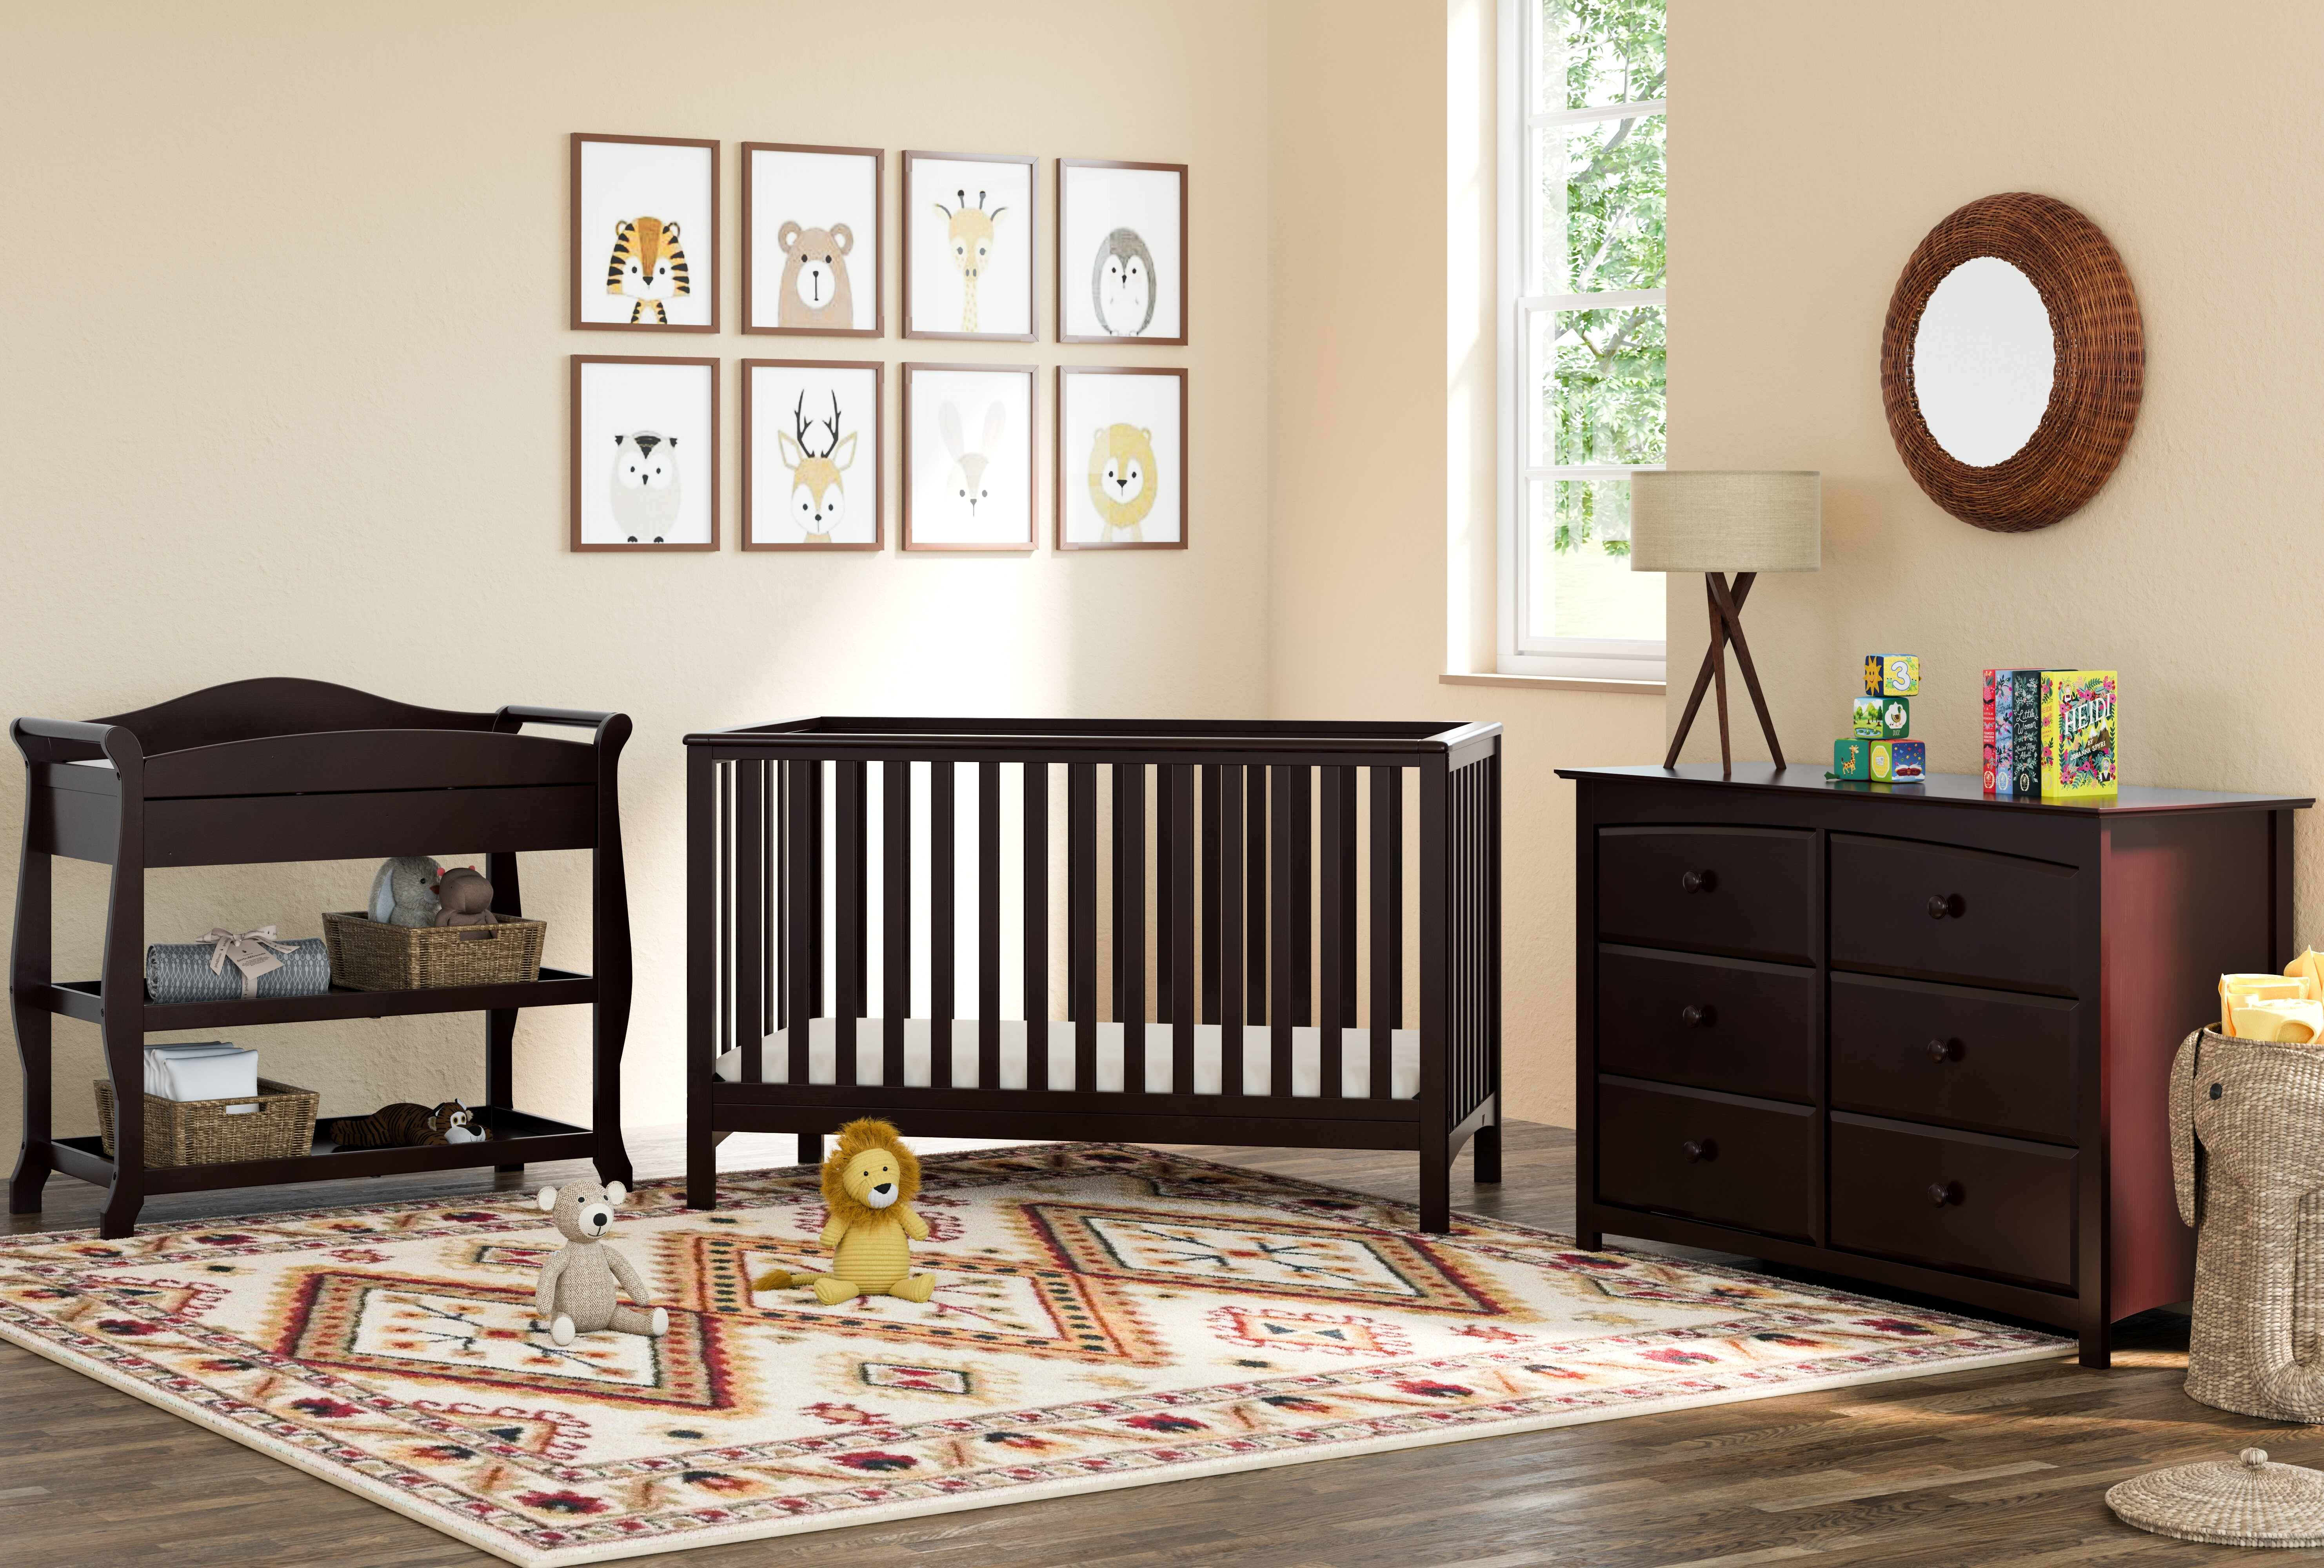 Hillcrest 3 In 1 Convertible Crib 3 Piece Nursery Furniture Set throughout measurements 5927 X 4000